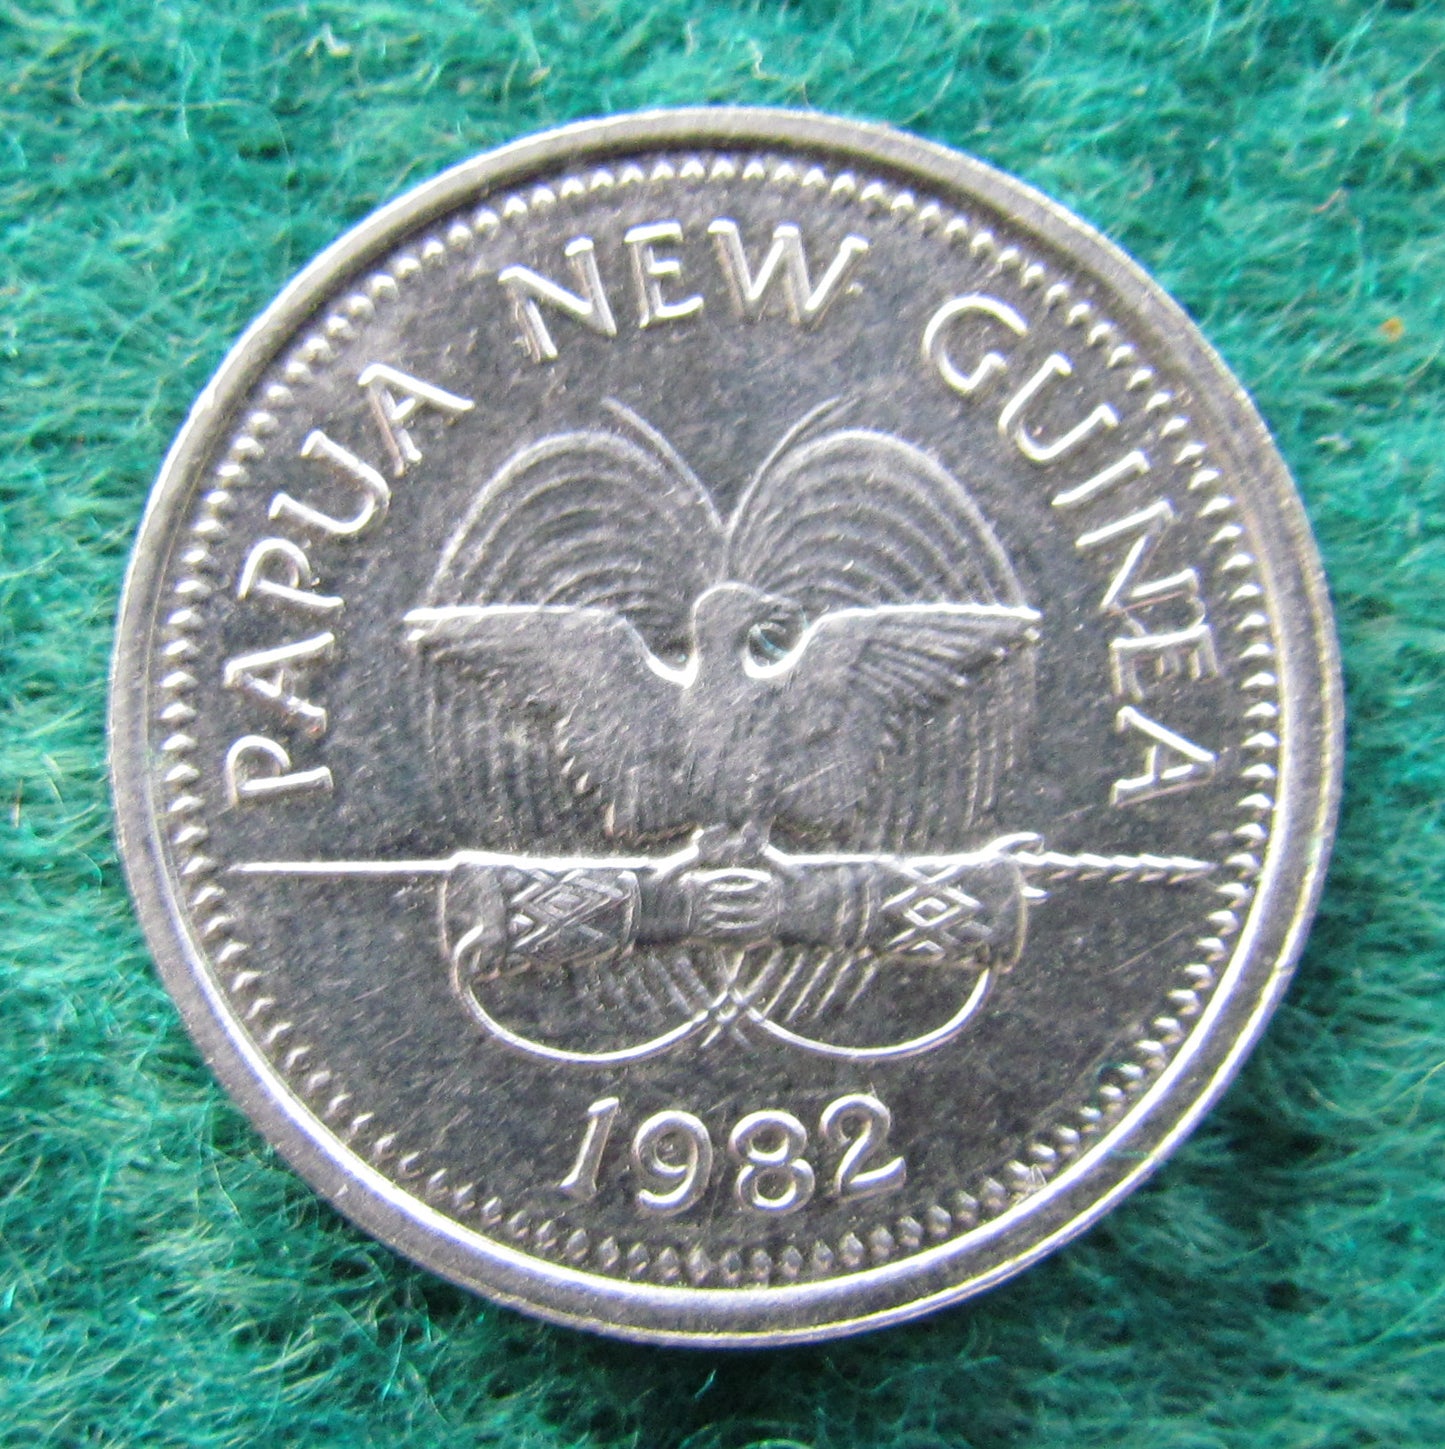 New Guinea 1982 5 Toea Coin - Circulated